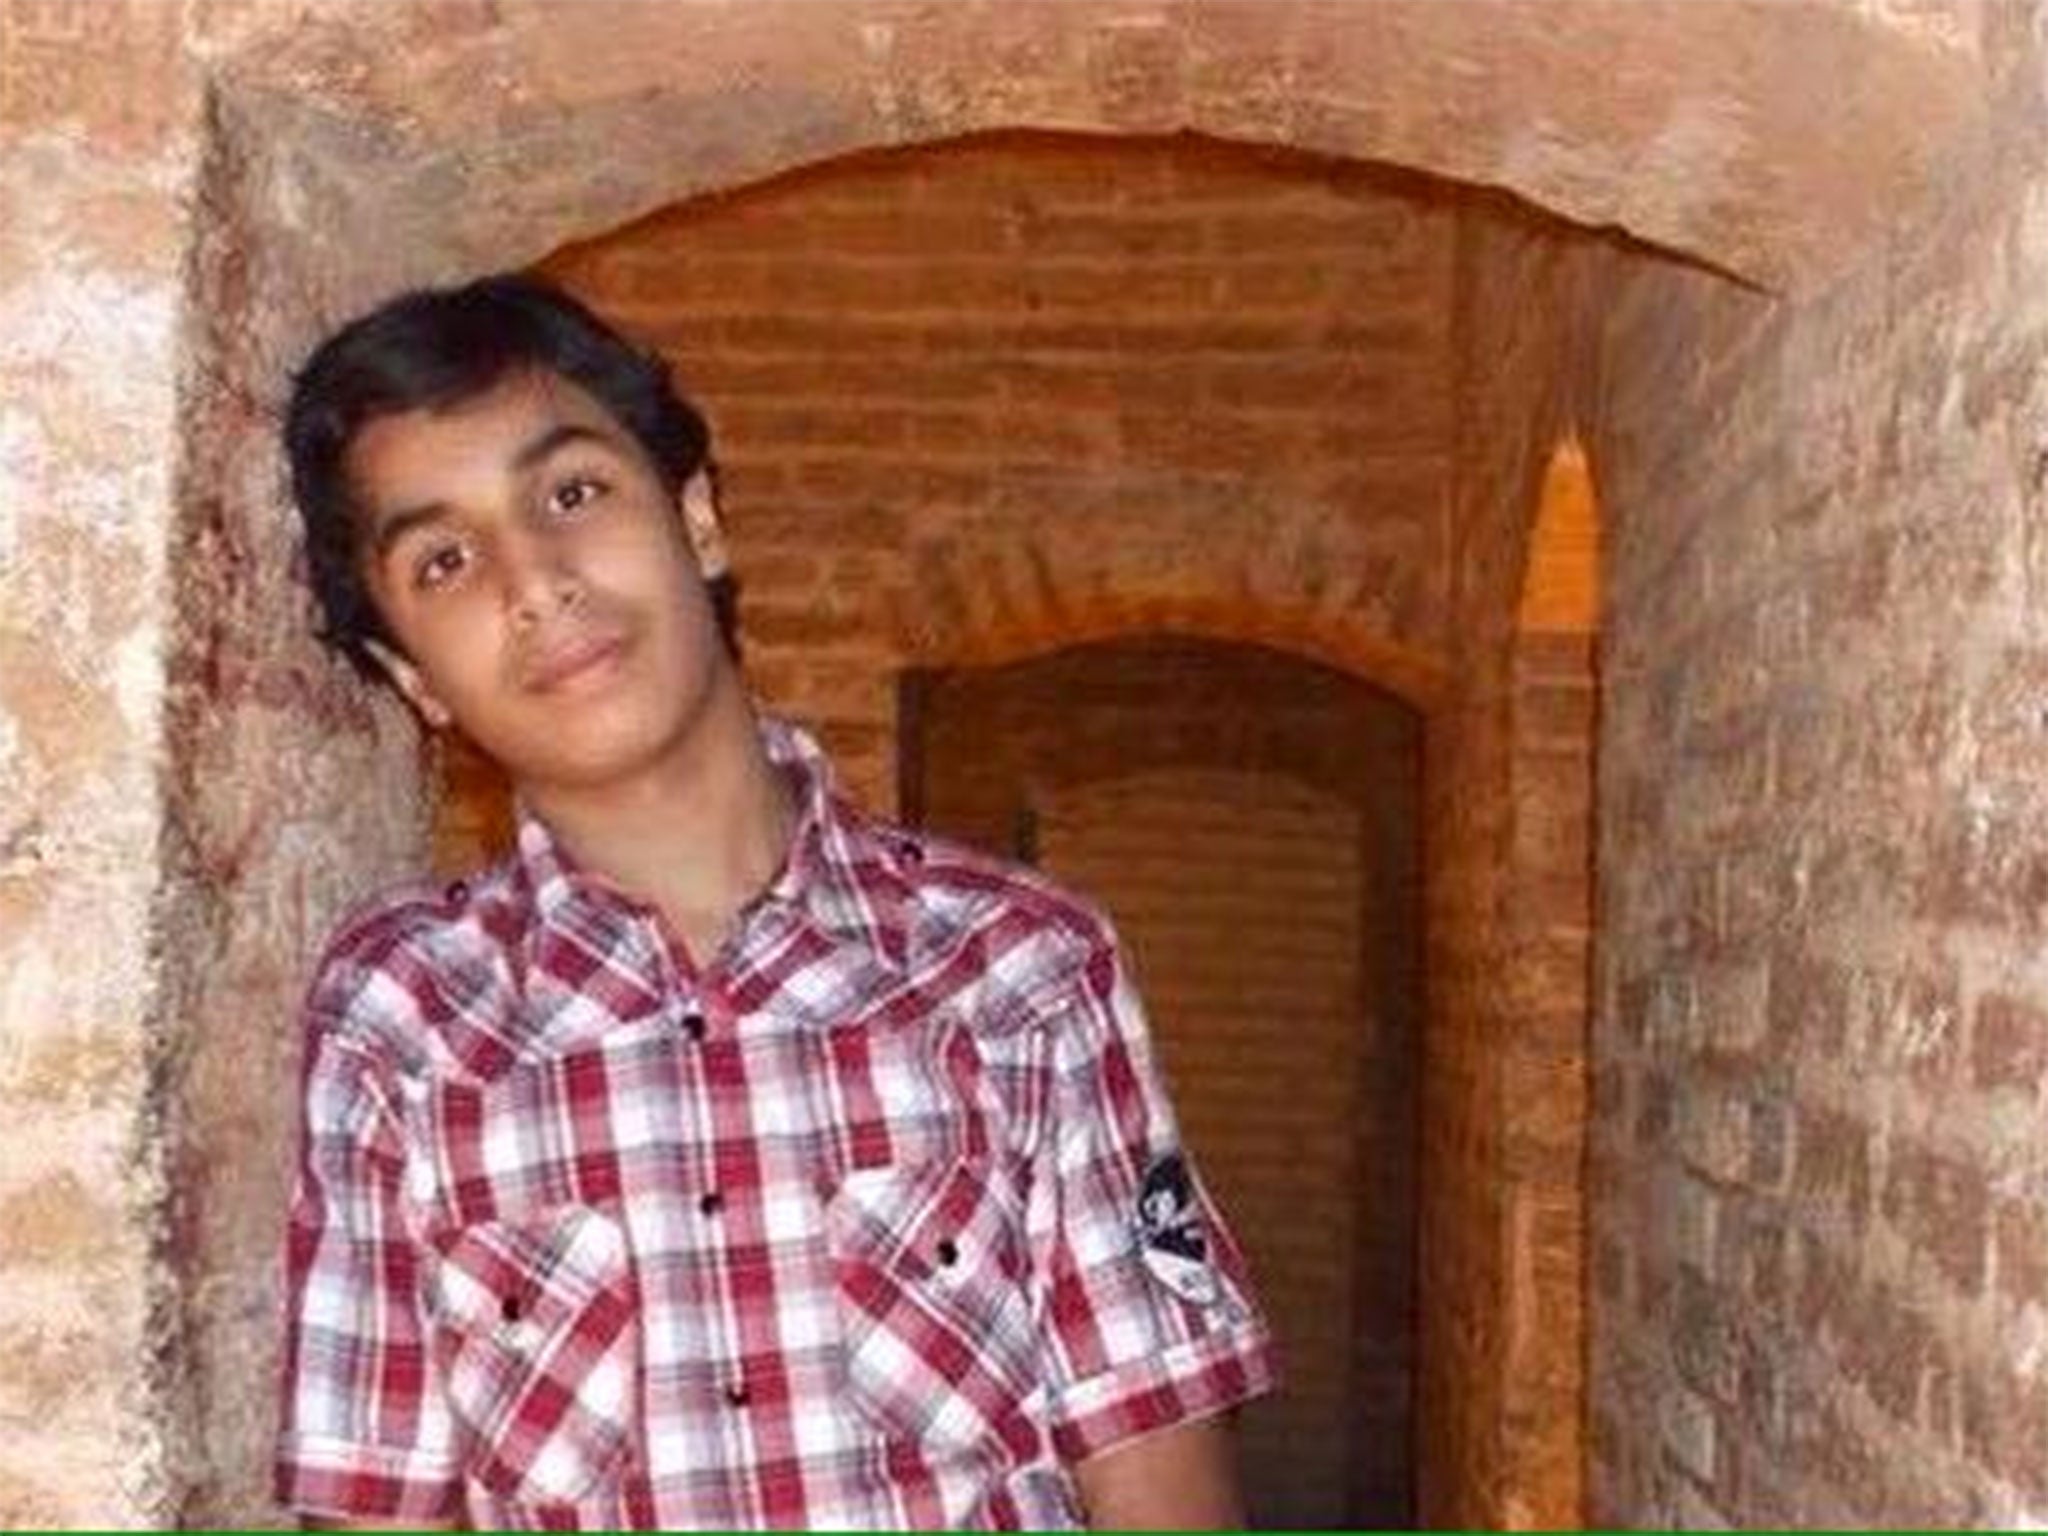 Ali al-Nimr faces the death penalty in Jeddah